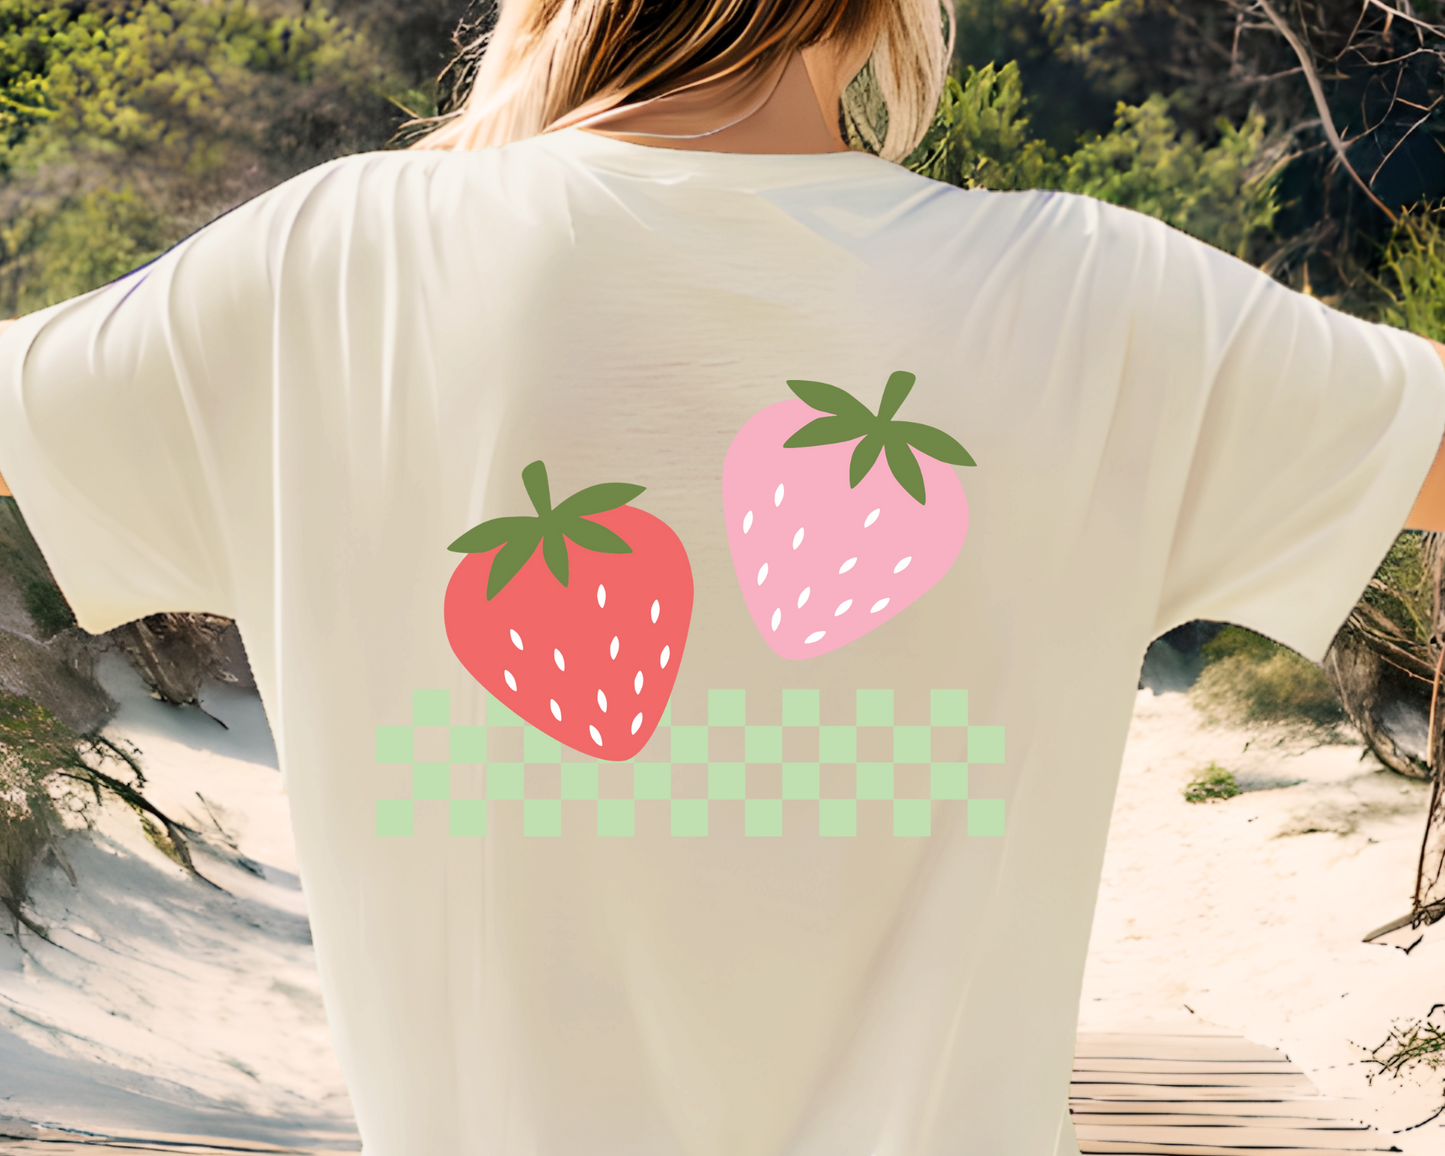 FREE Retro Strawberry SVG | Checkered Strawberry SVG